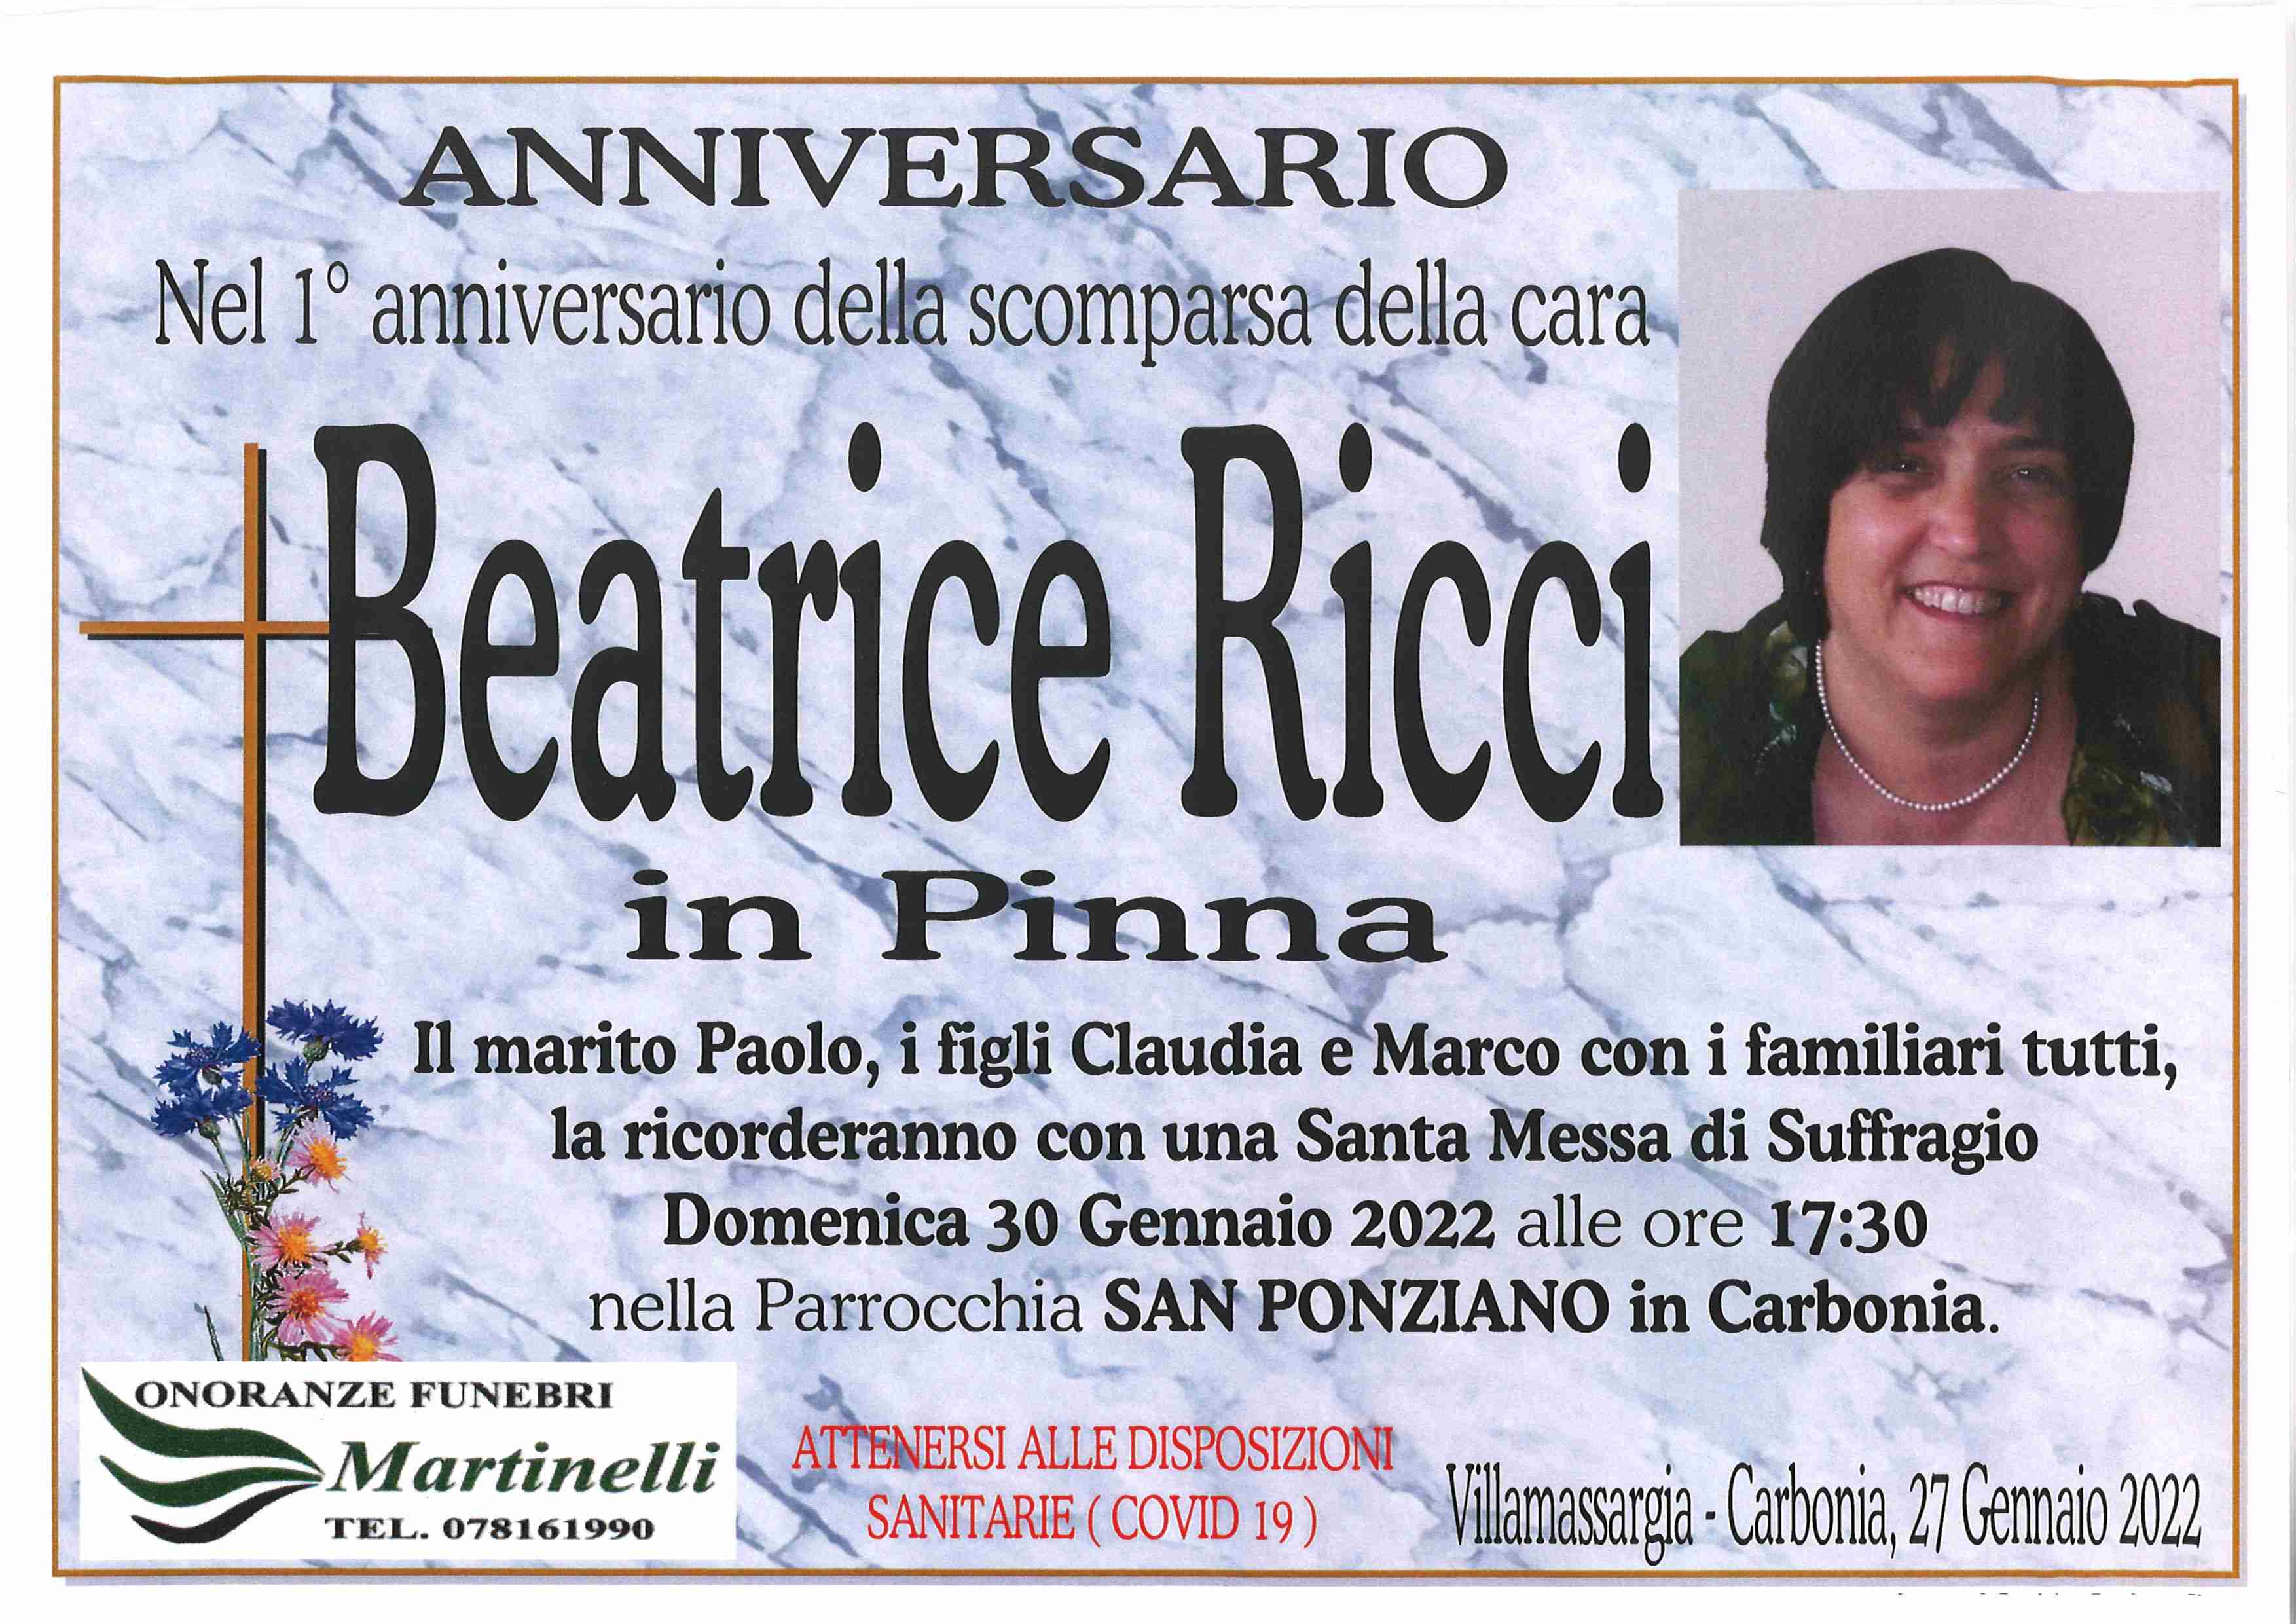 Beatrice Ricci